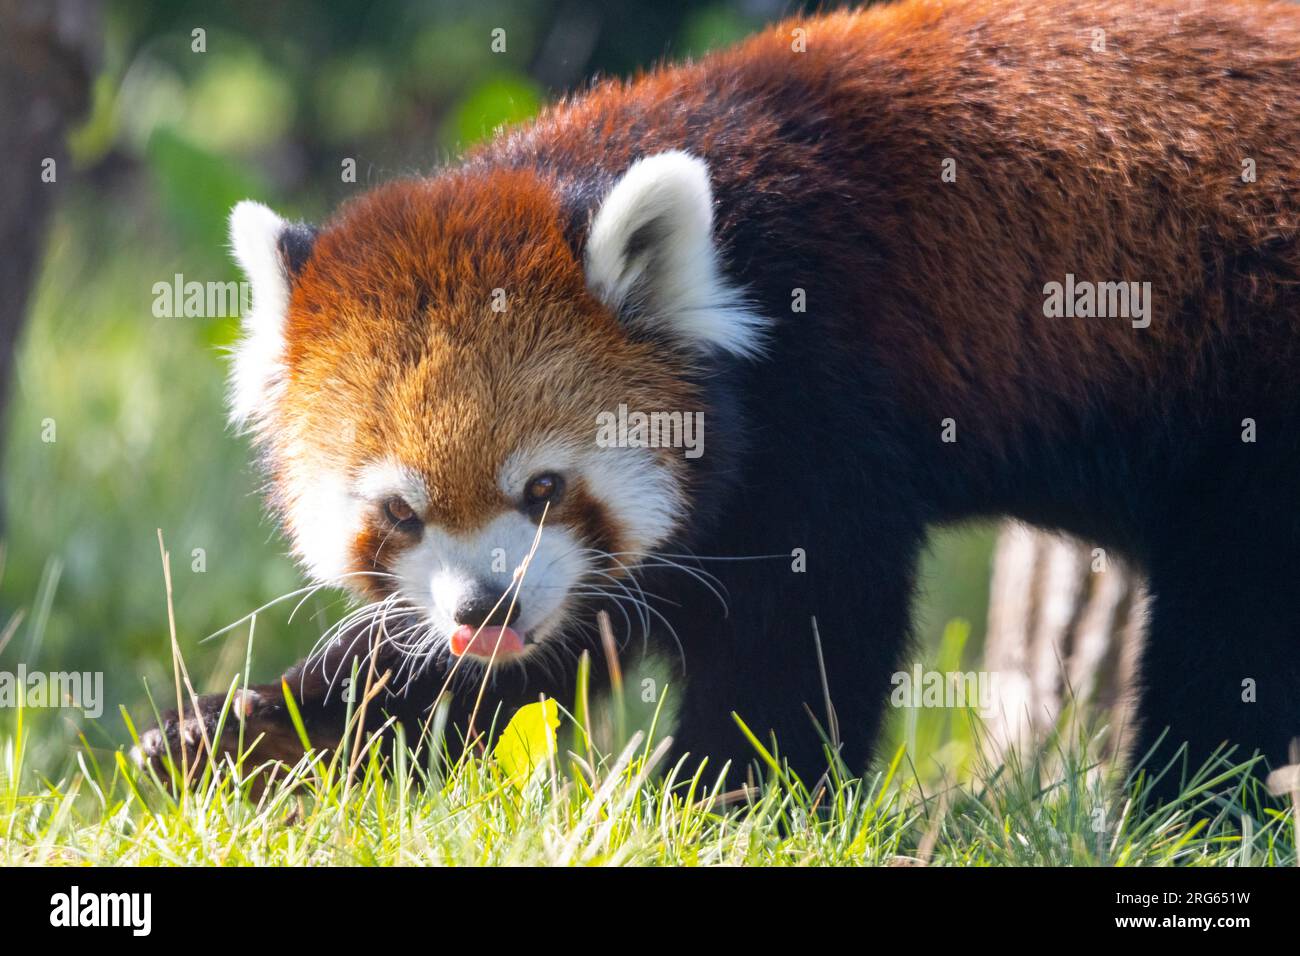 close up of adorable red panda bear in grass looking at camera Stock Photo